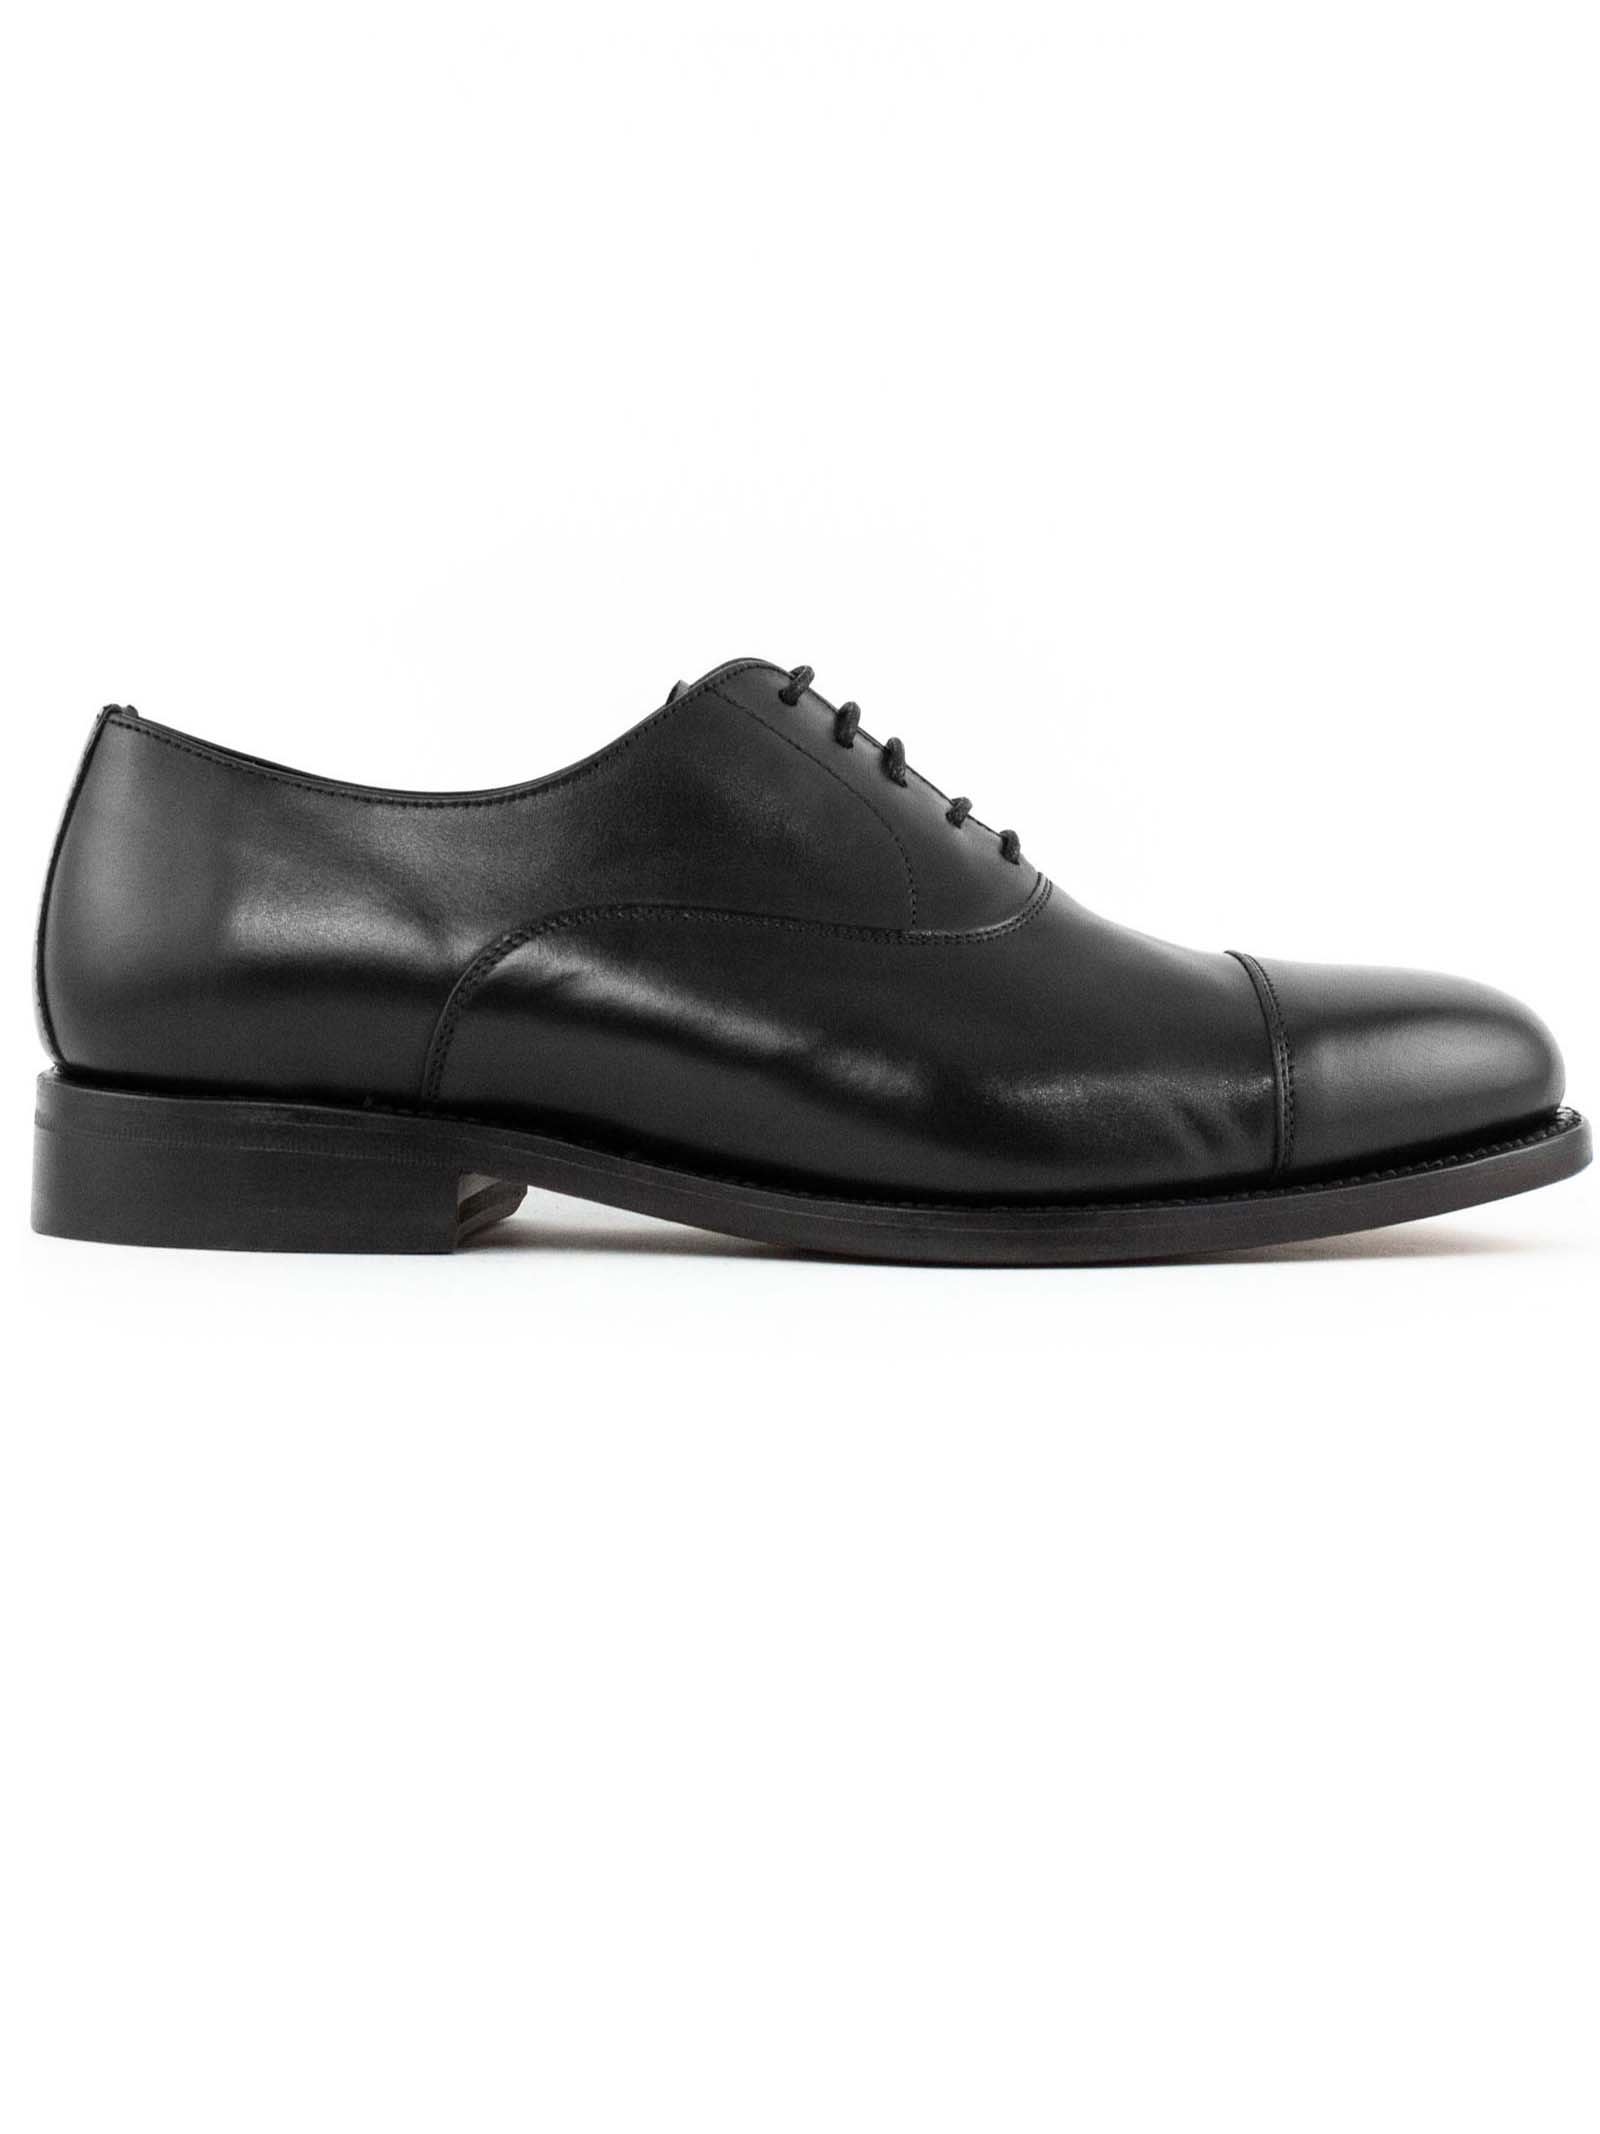 Berwick 1707 Black Calfskin Classic Oxford Shoes